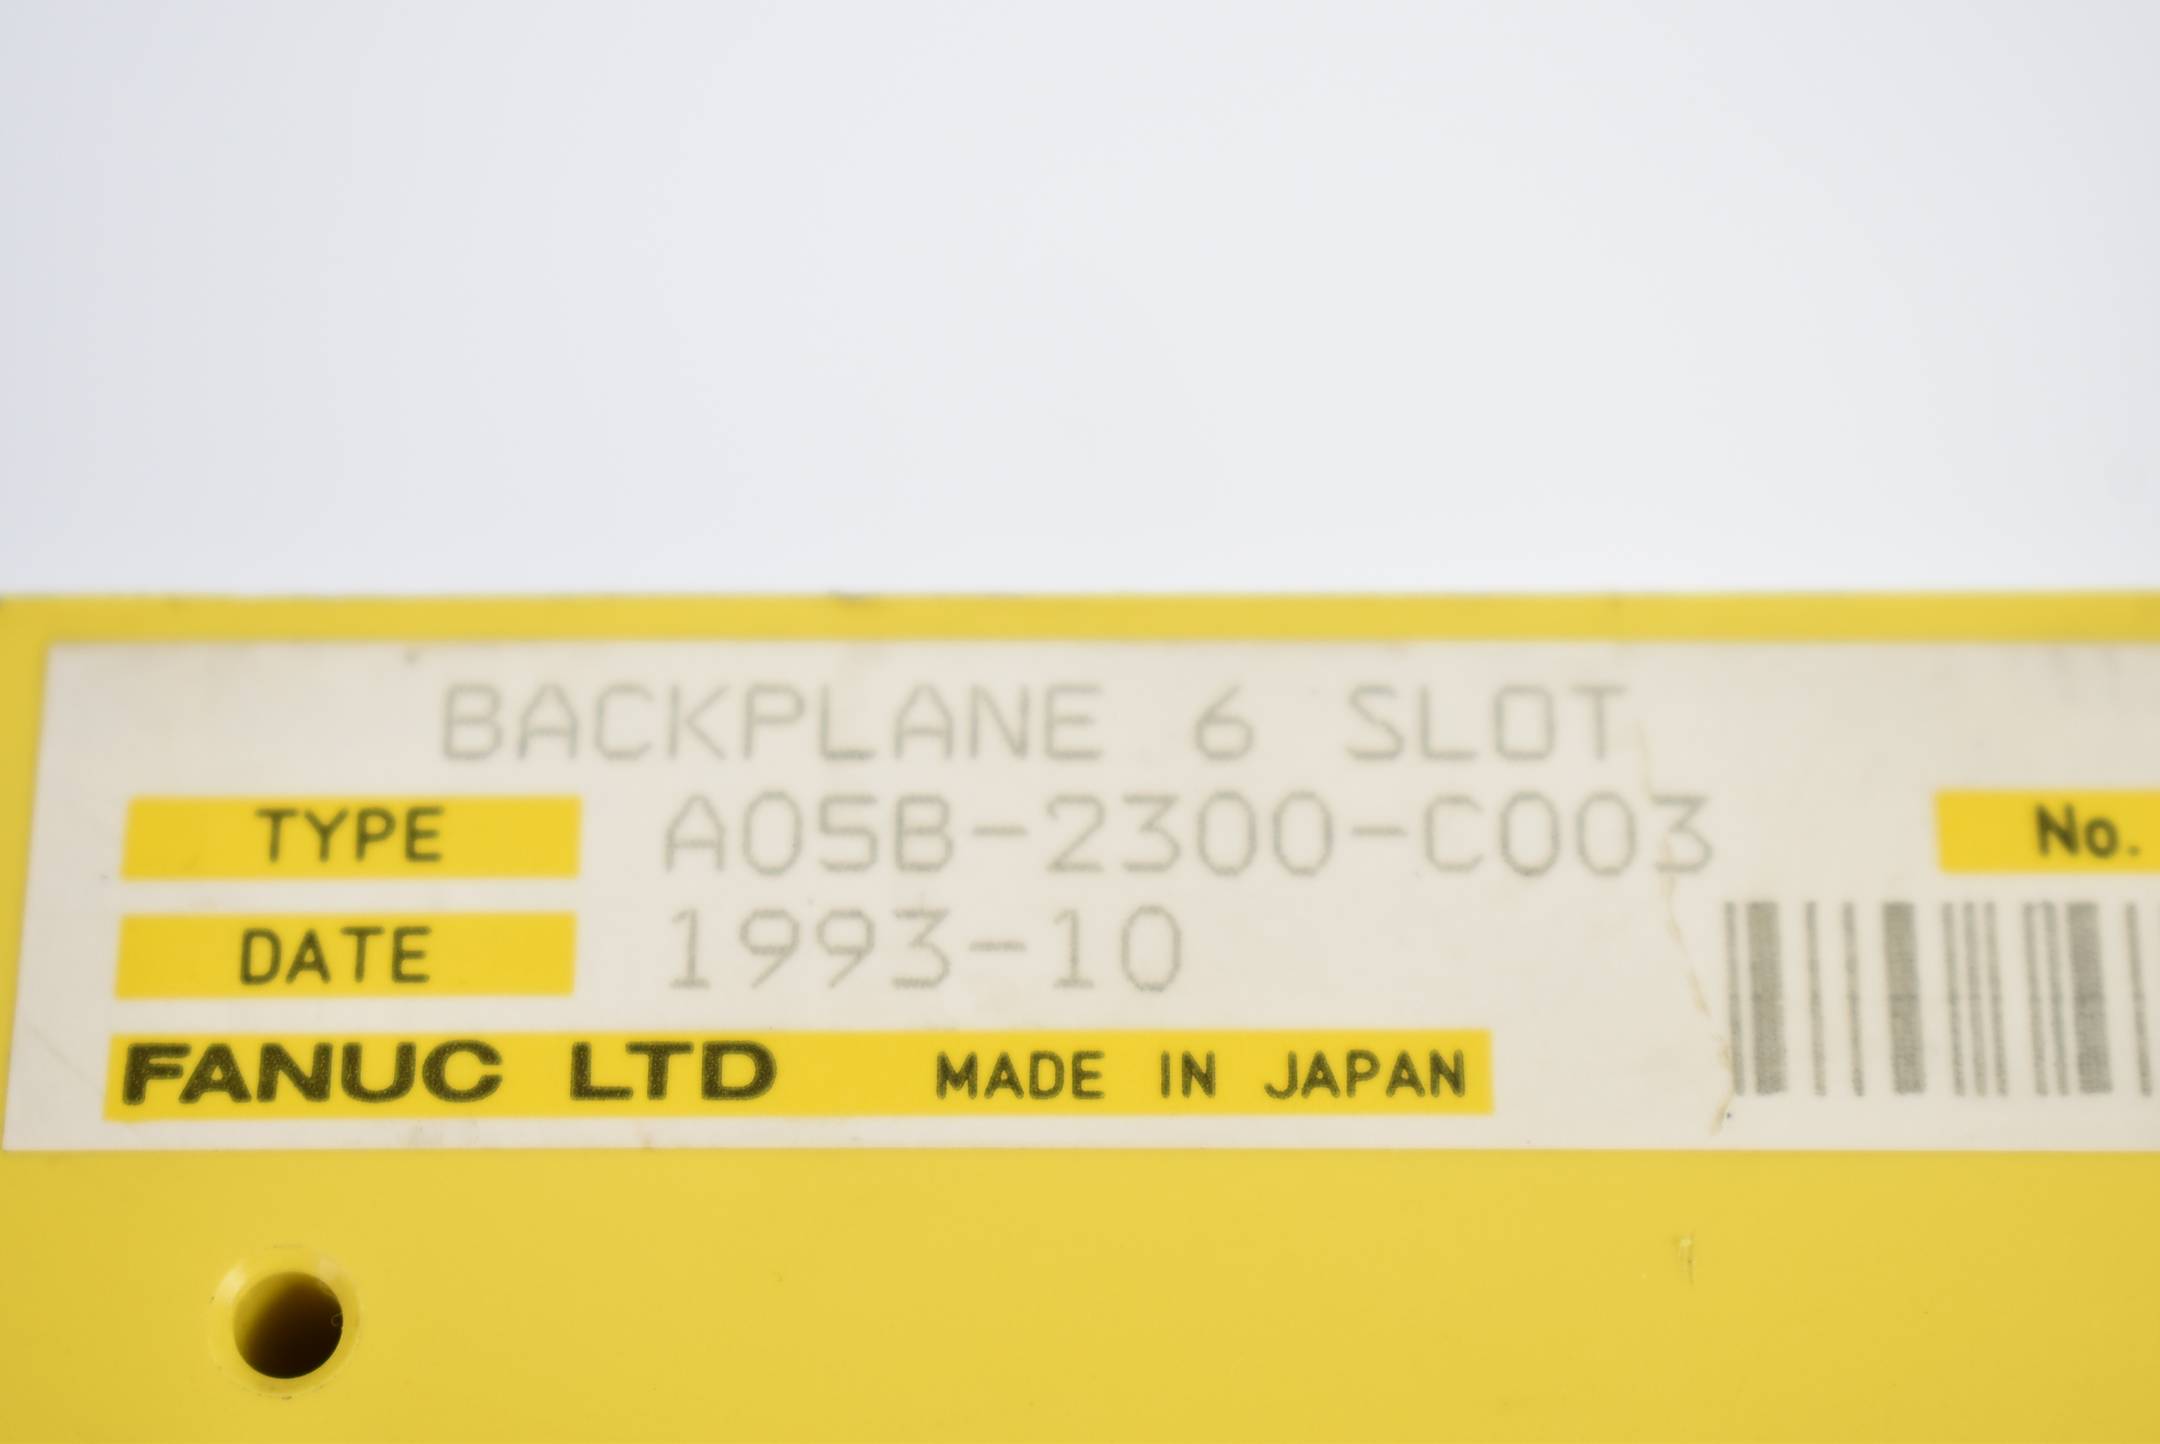 Fanuc Backplane A20B-2000-0920/02B inkl. A05B-2300-C003